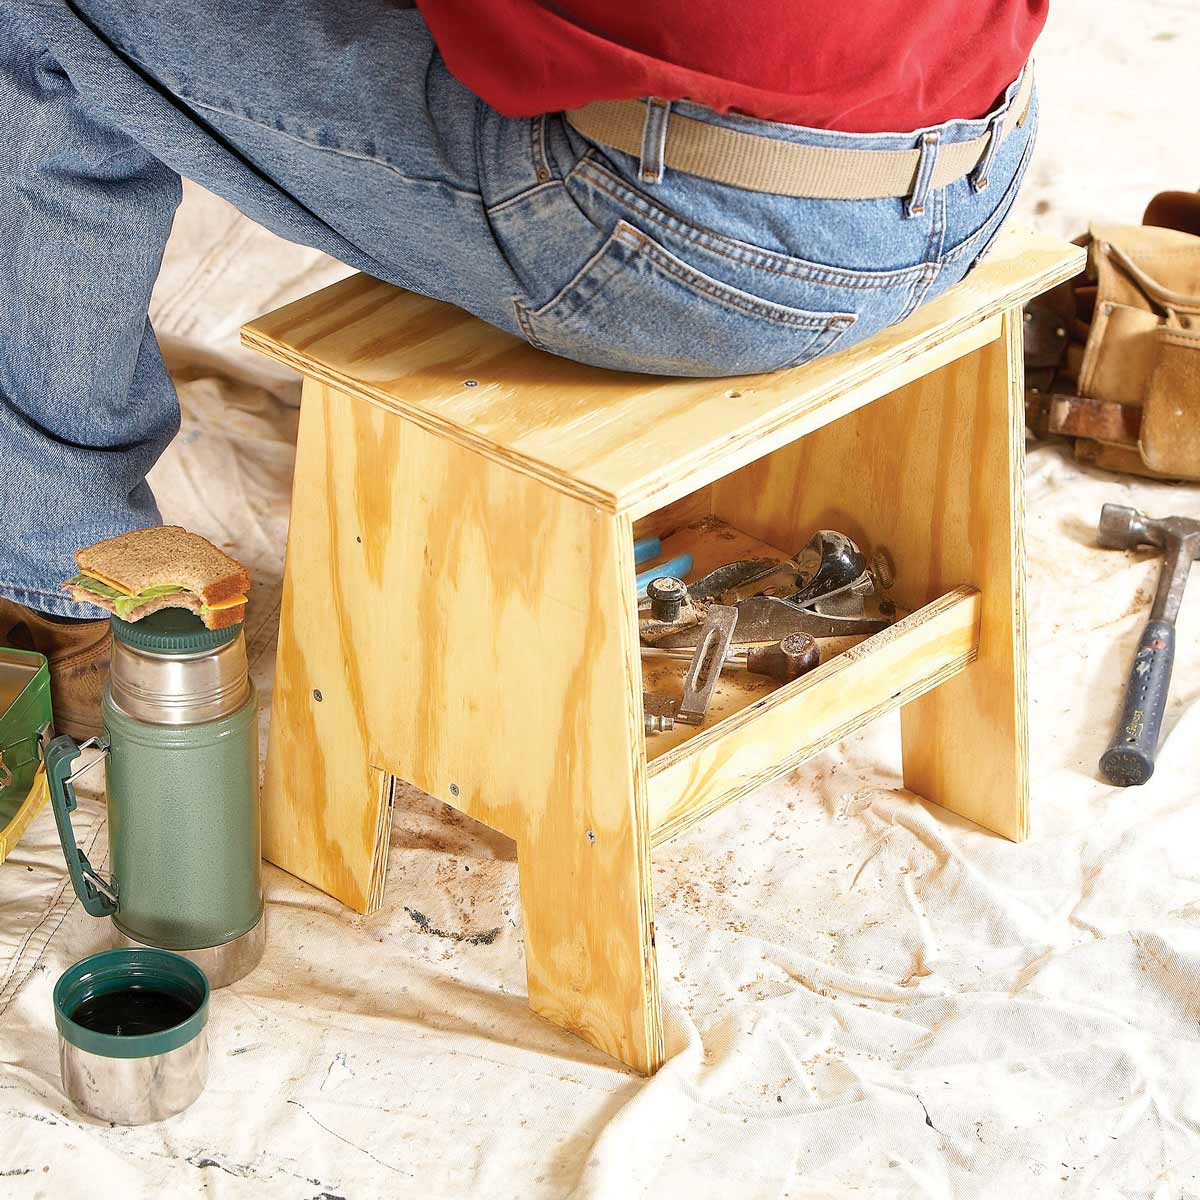 Lem kayu dan lem hpl Crona - familihandyman.com FH10MAR 506 10 024 small bench 1200x1200 1